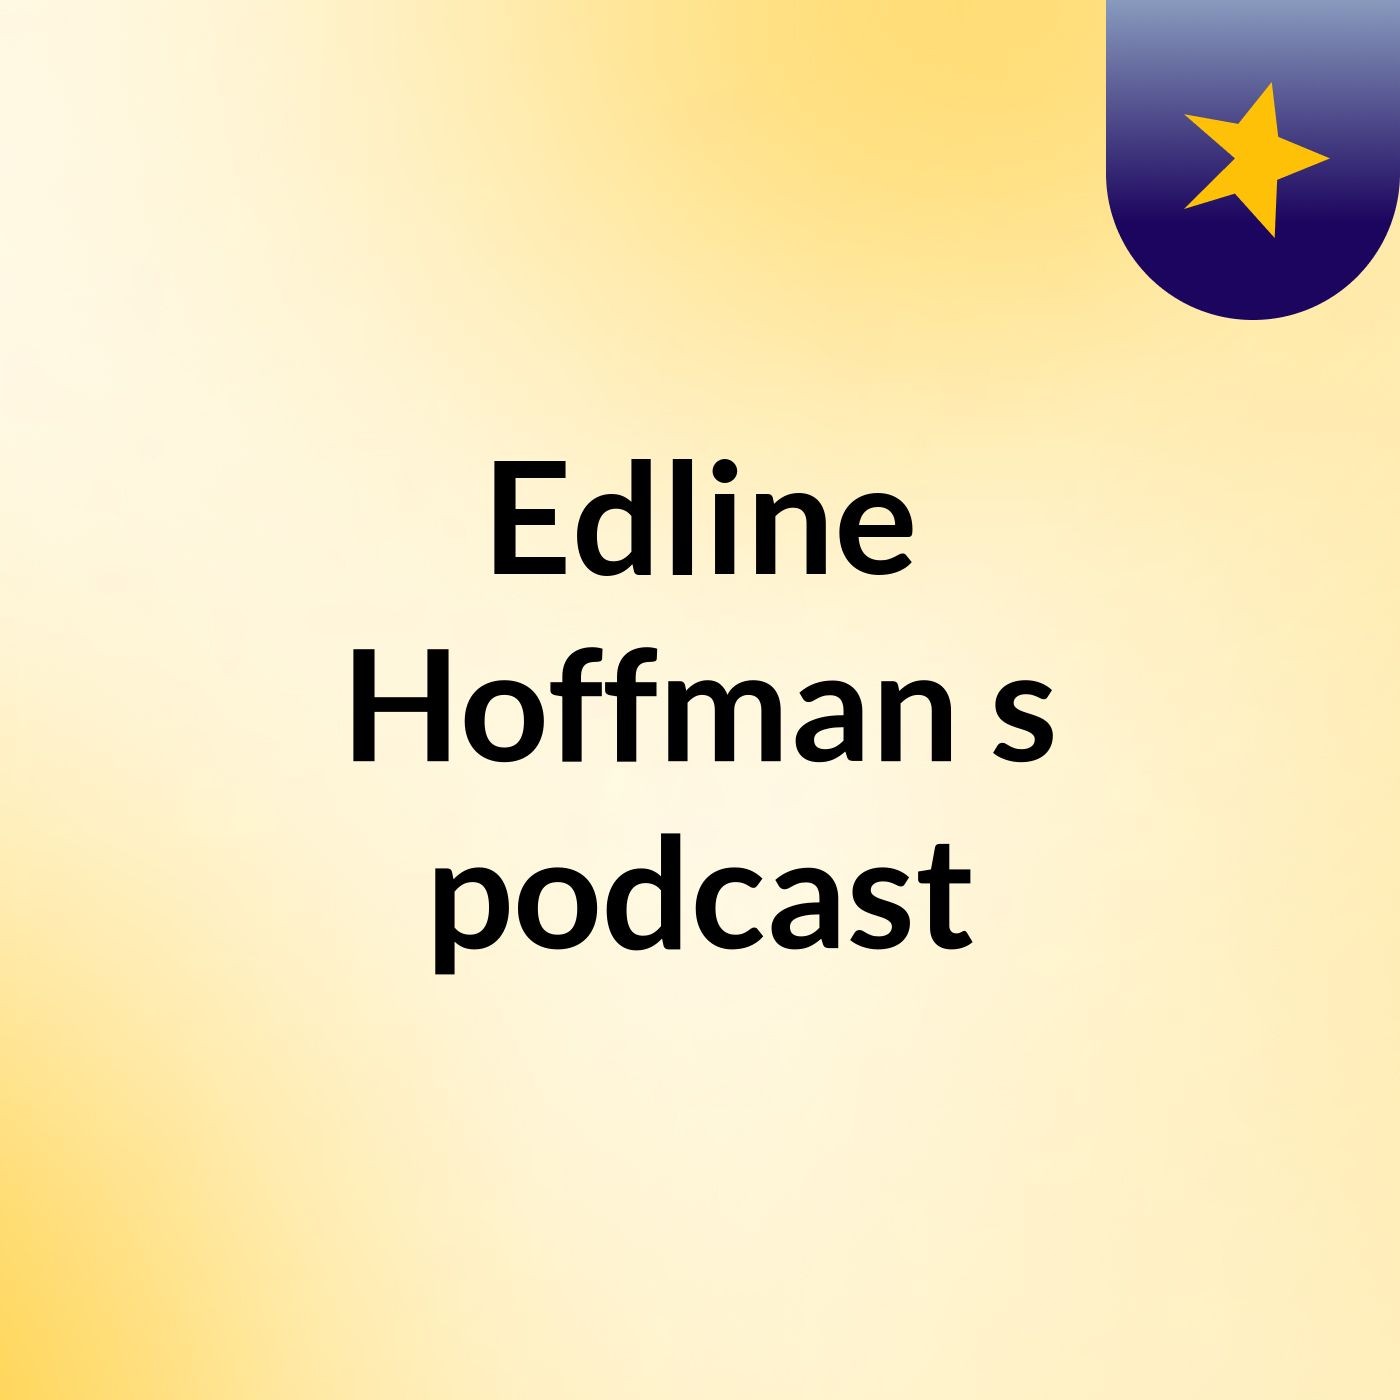 Edline Hoffman's podcast